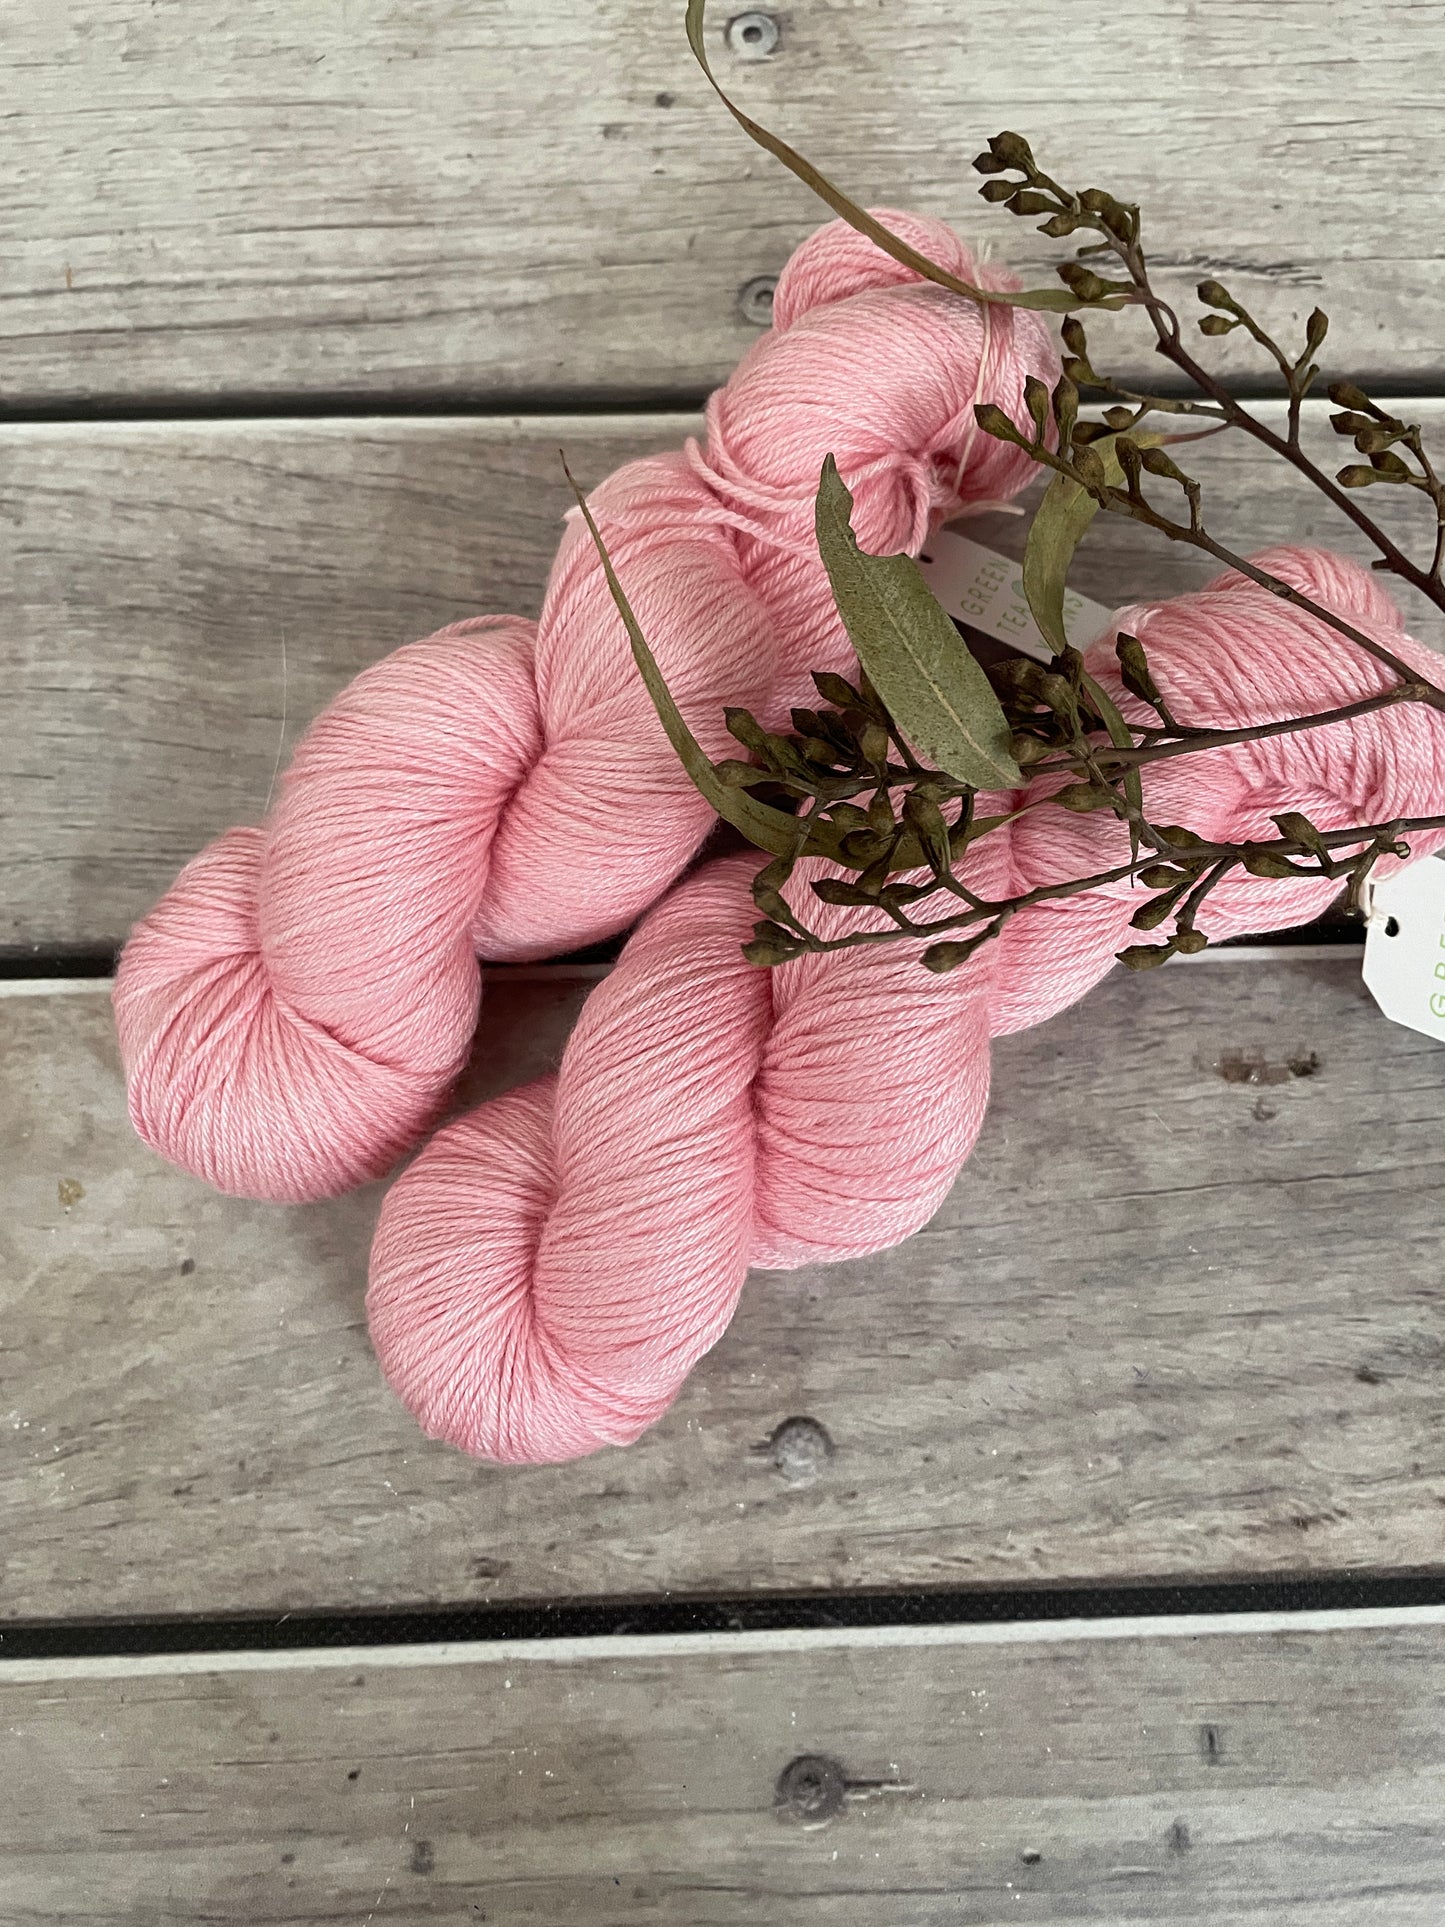 Pretty in Pink - 4ply/fingering - silk and merino yarn - Jasmin 4